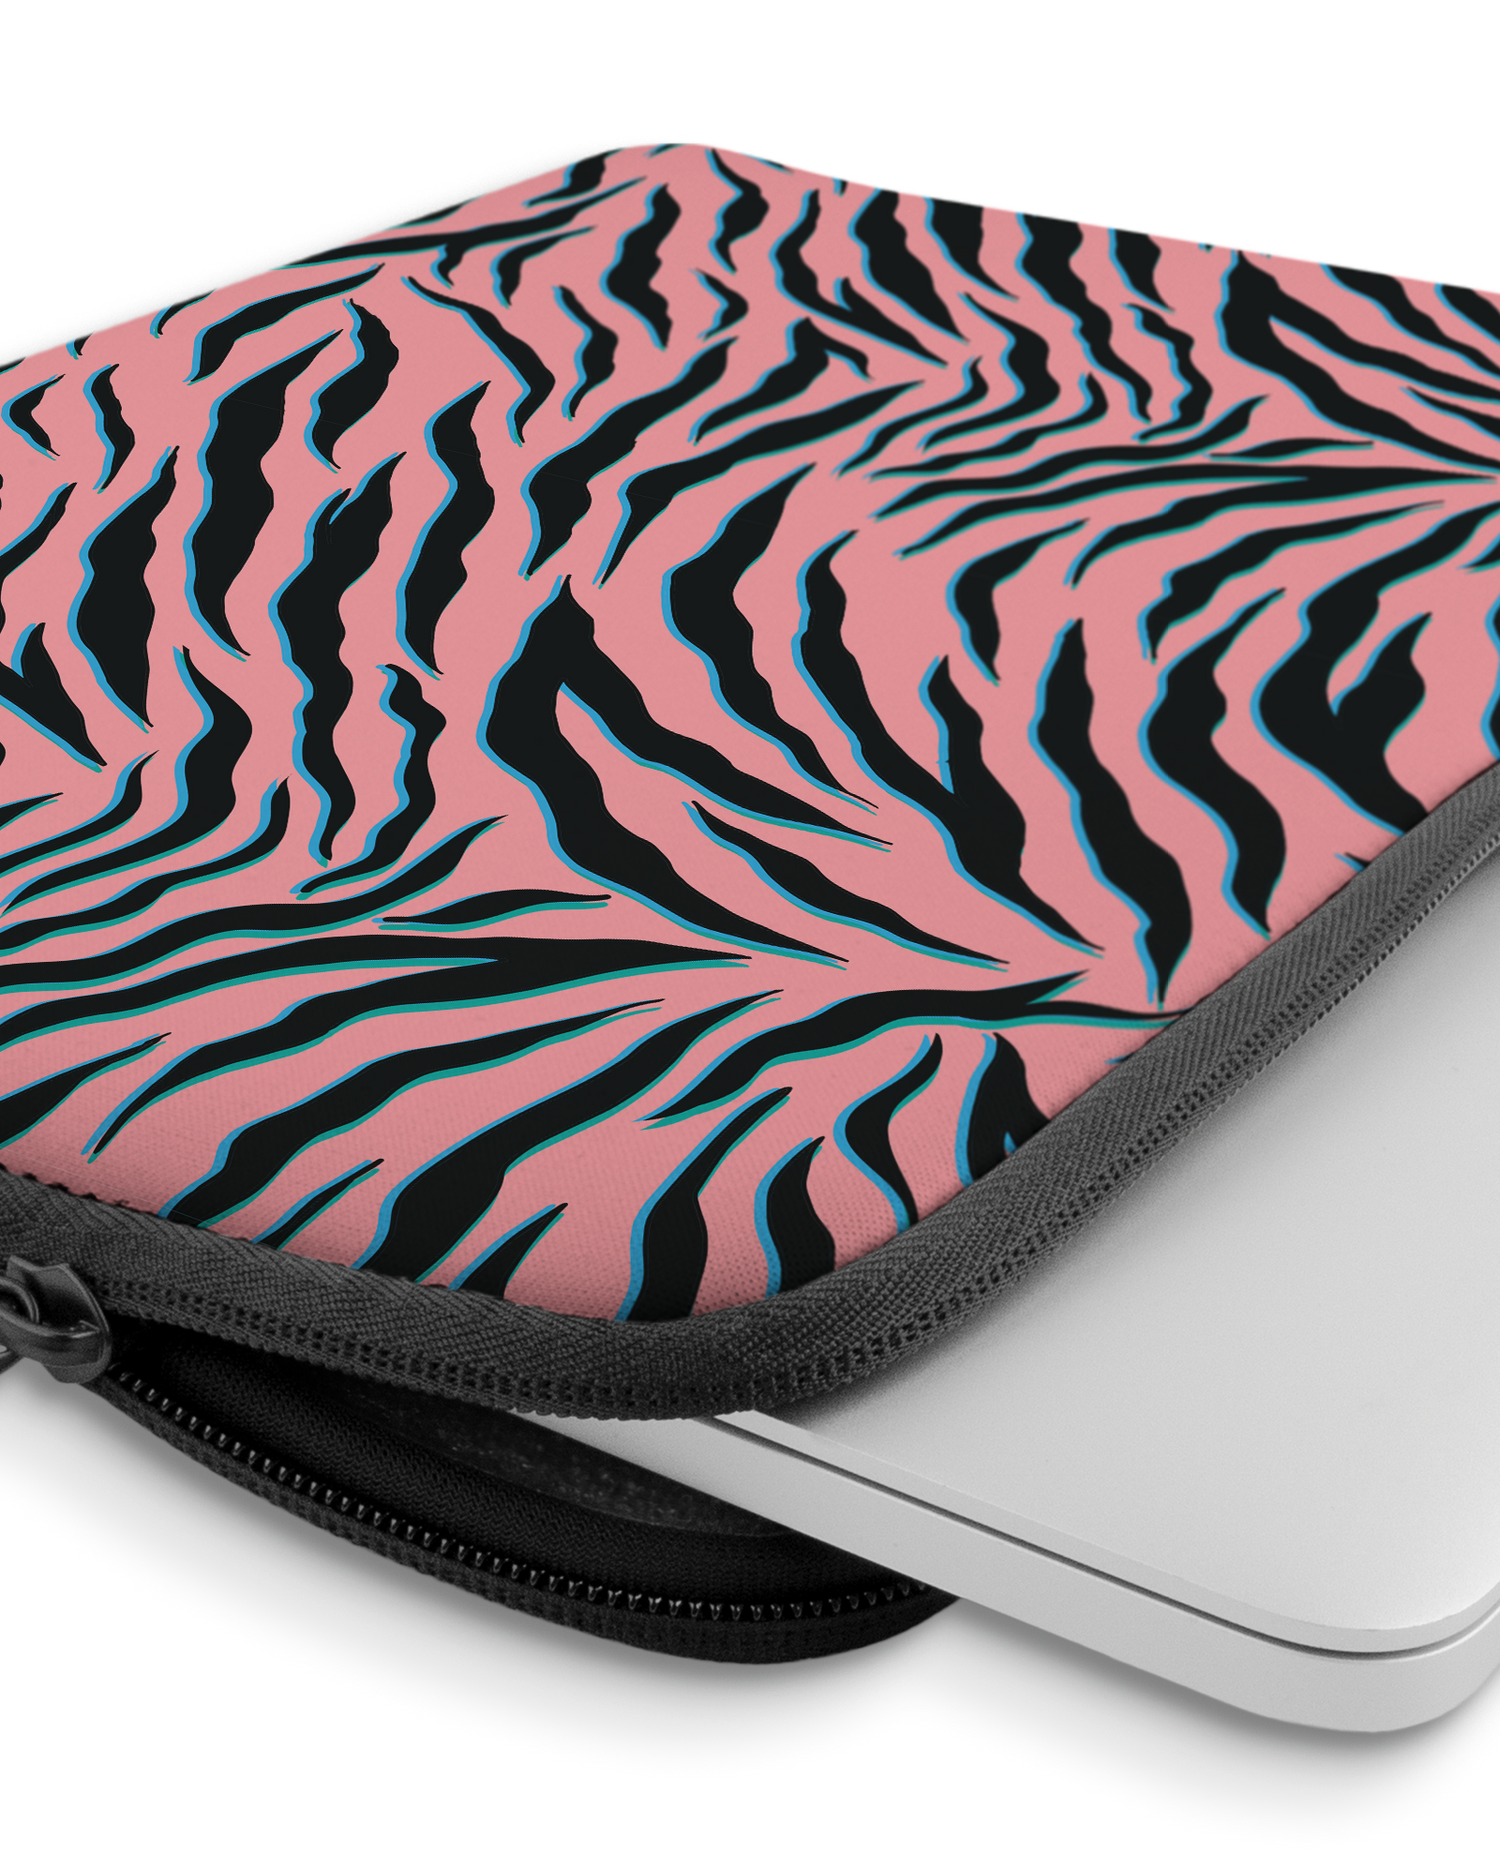 Pink Zebra Laptop Case 13-14 inch with device inside